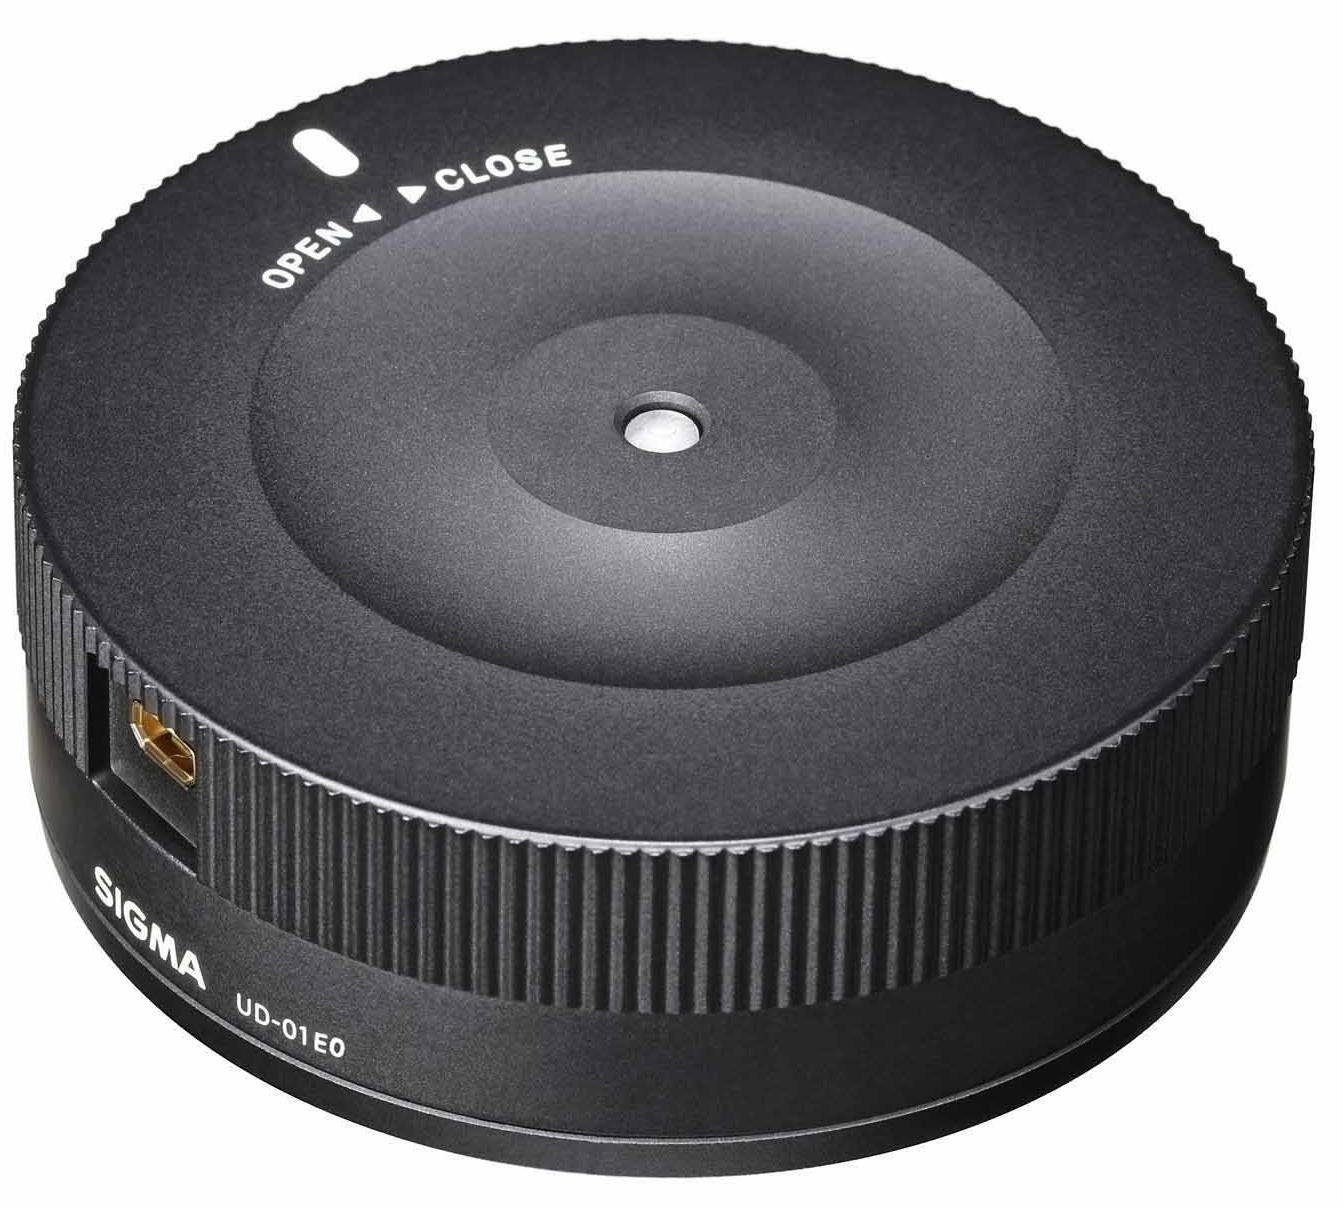 SIGMA USB Dock Canon Objektivbajonett schwarz Objektivzubehör